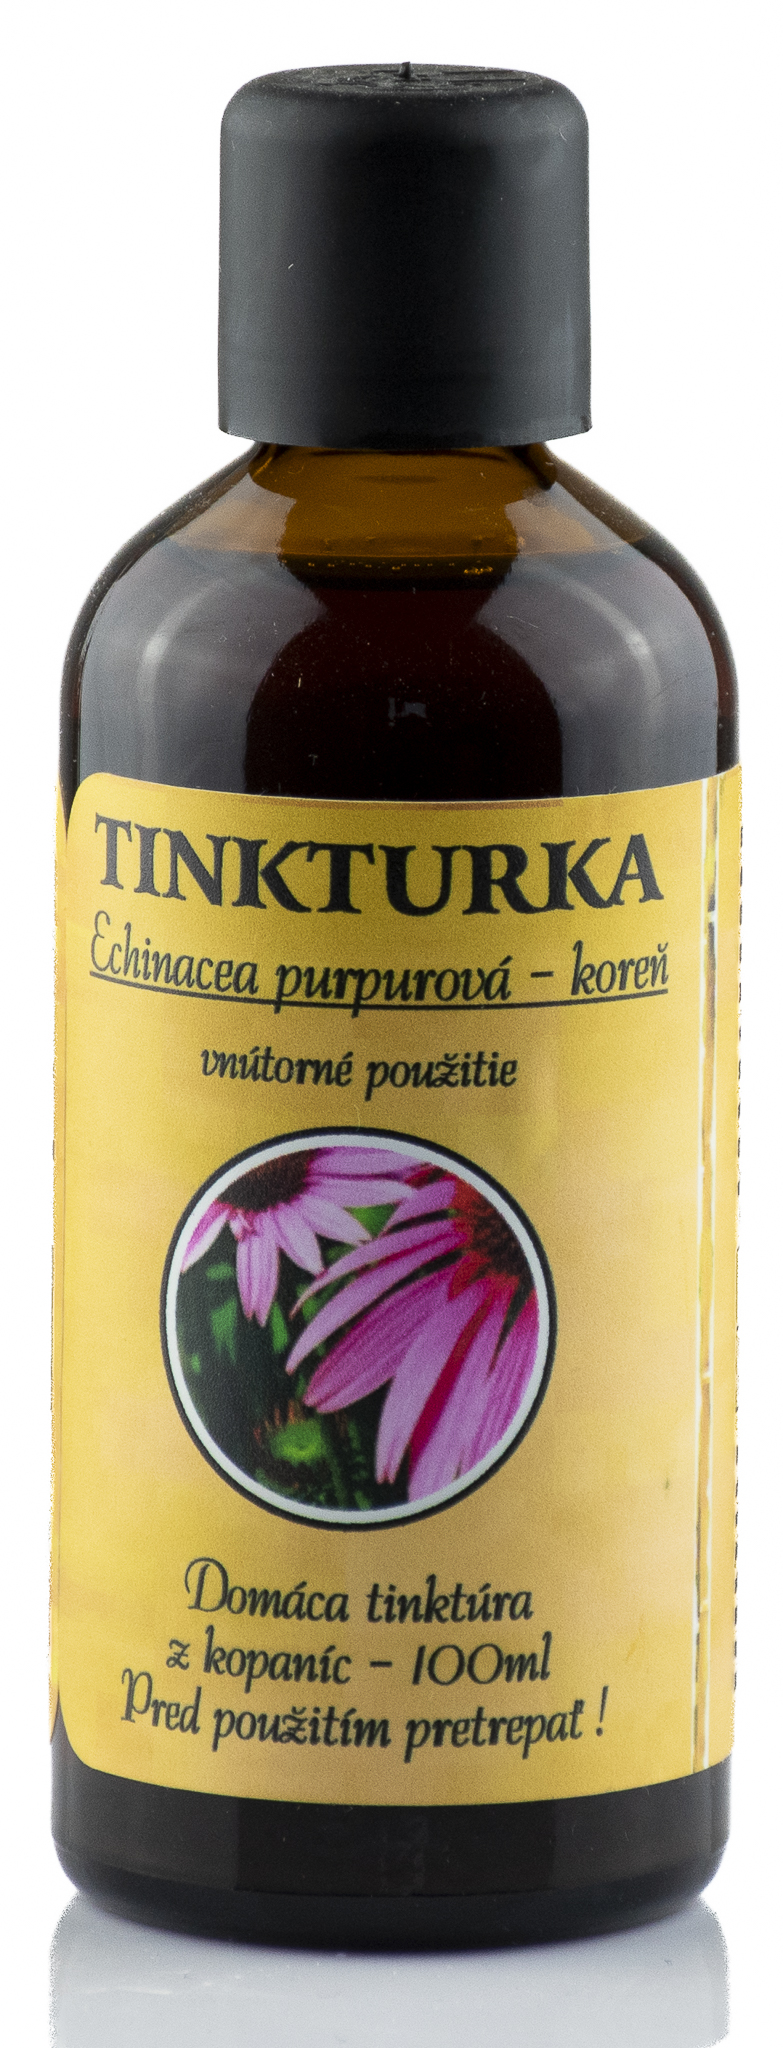 PANAKEIA TINKTURKA - Echinacea purpurová koreň 100ml Kusy: 1